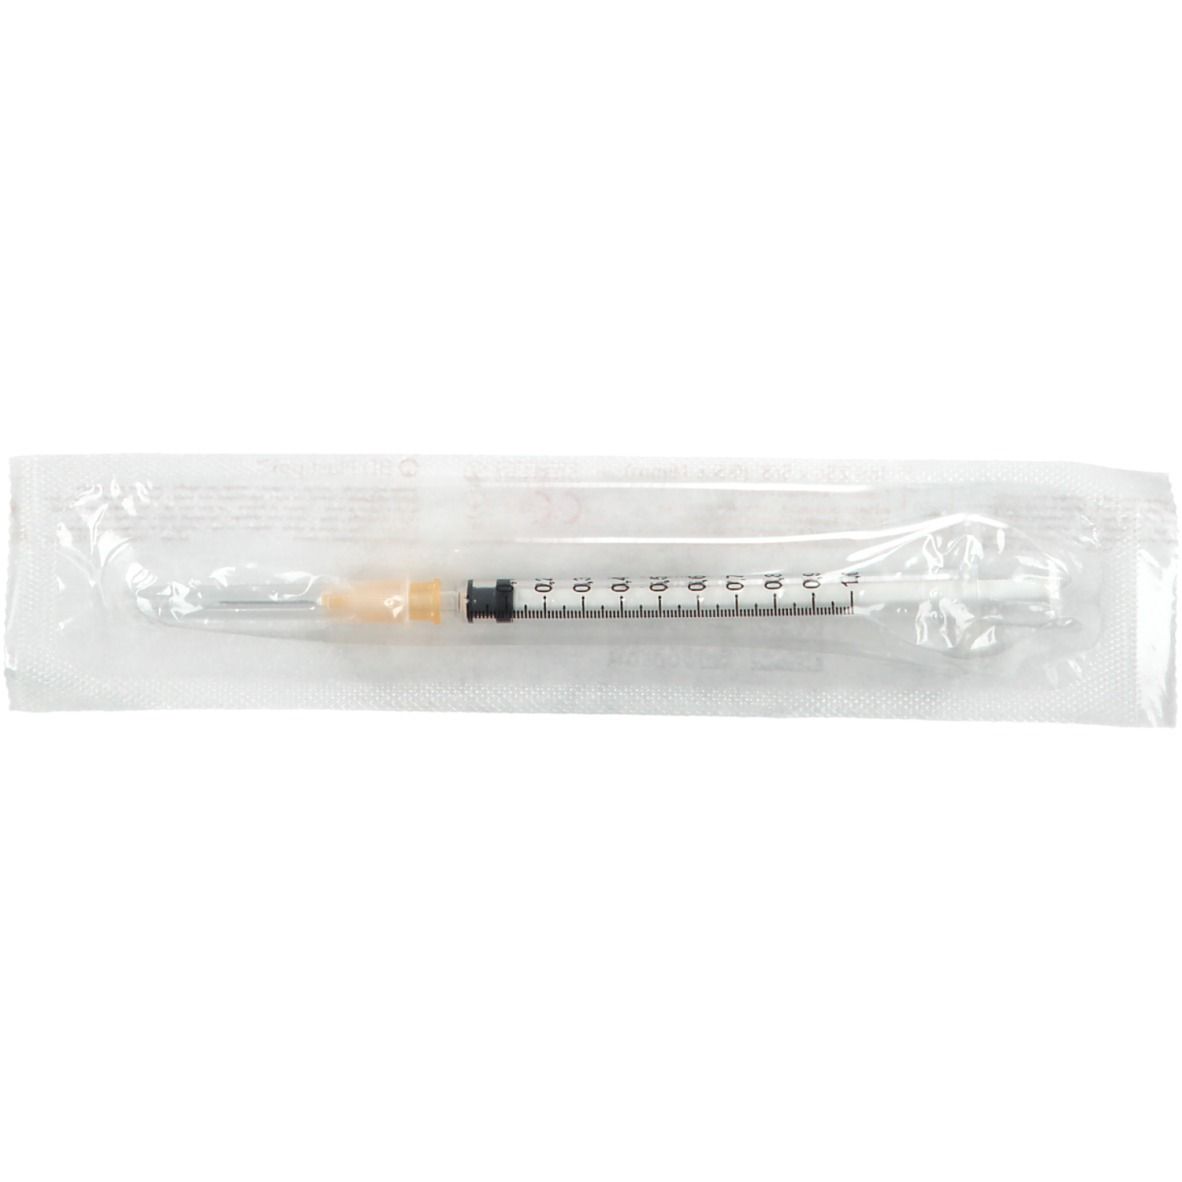 BD Plastipak™ seringue Luer Lock - aiguille 22G 1 1/2 - seringue 5 ml